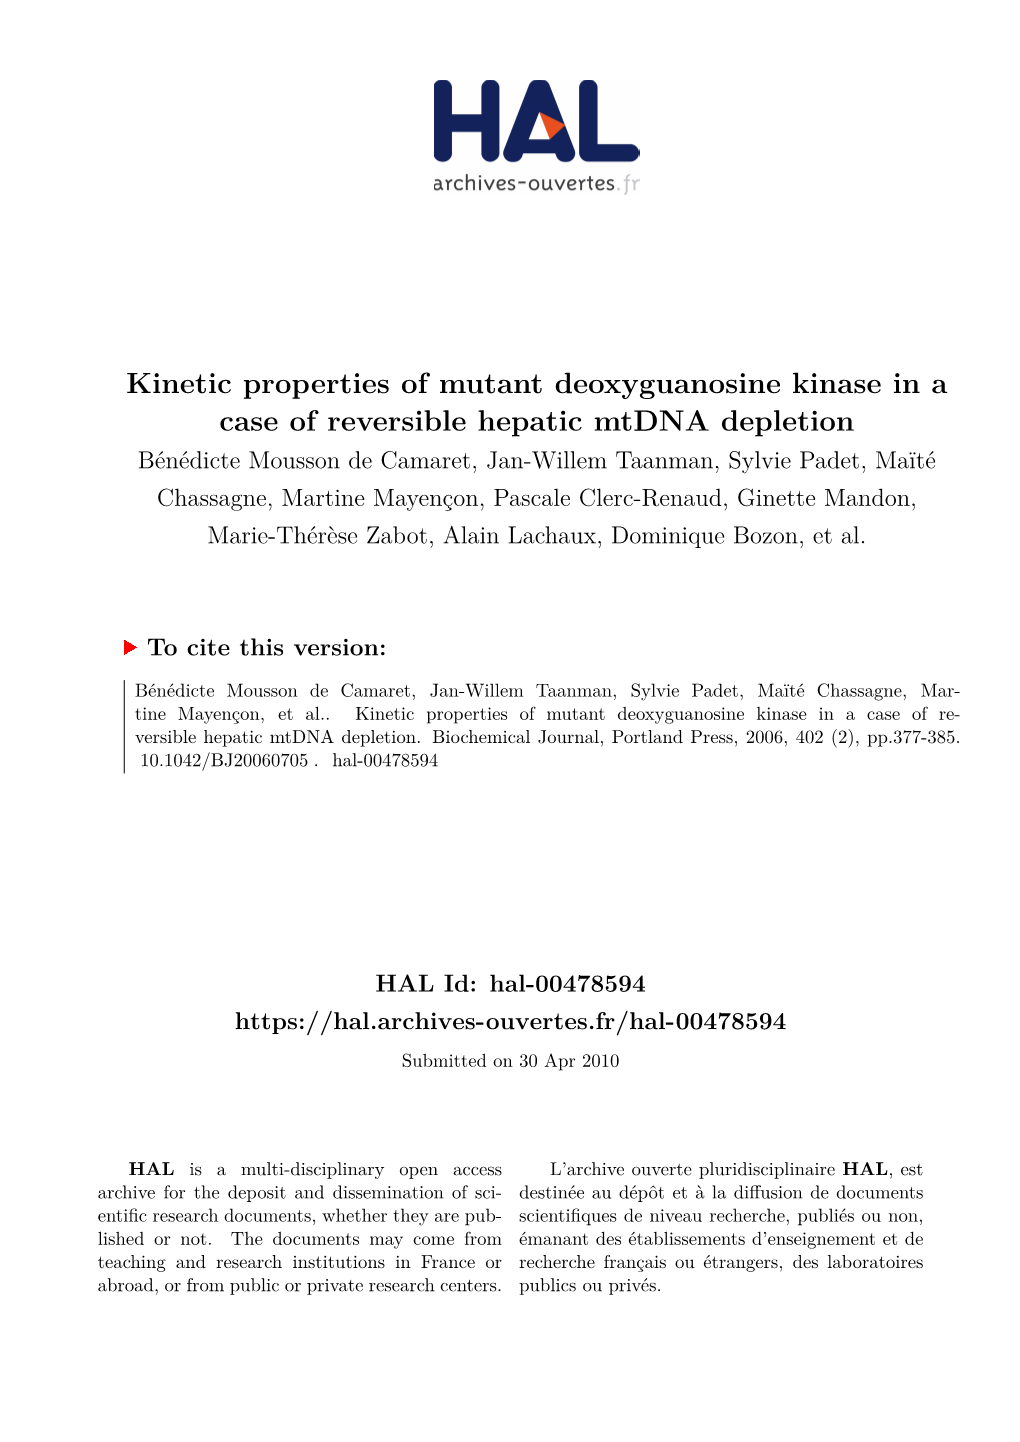 Kinetic Properties of Mutant Deoxyguanosine Kinase in a Case Of